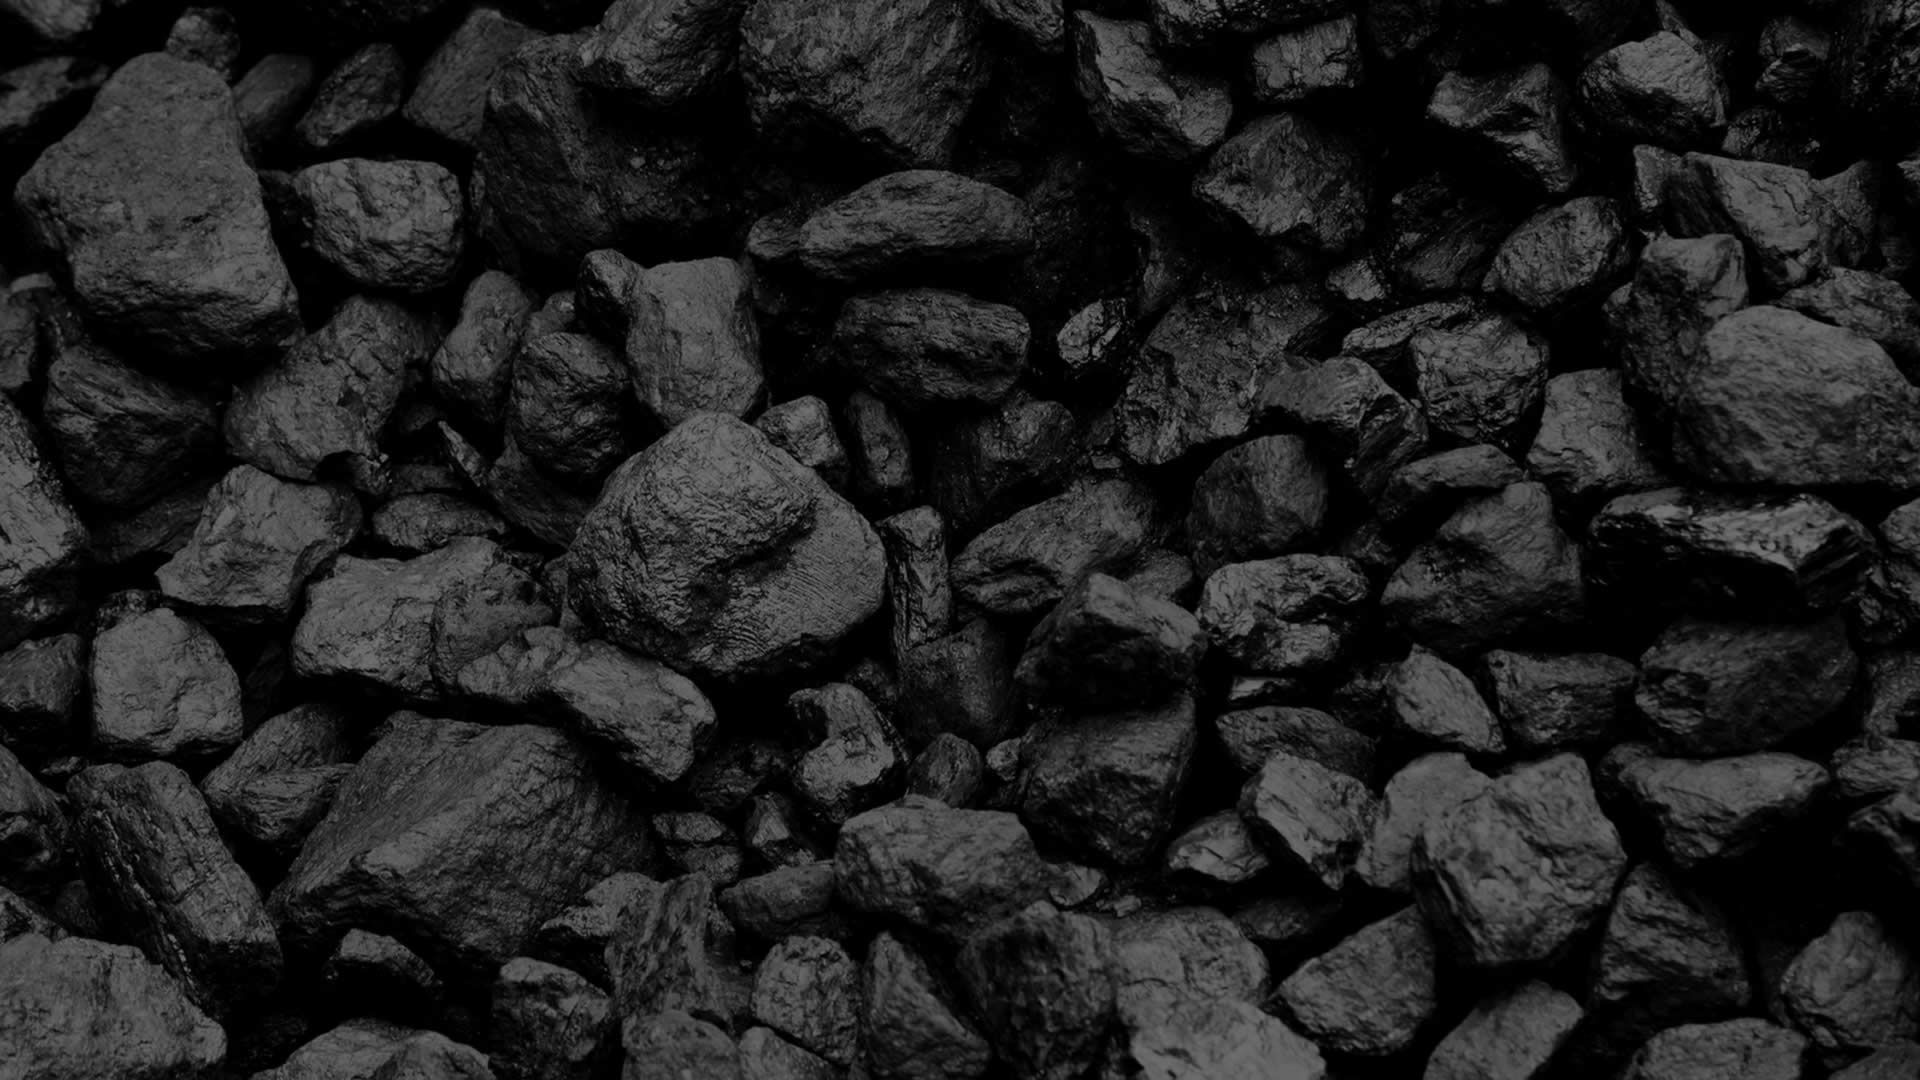 Indonesia coal mine supplier cif price Gar 5000 Gar 4500 Nar 4200